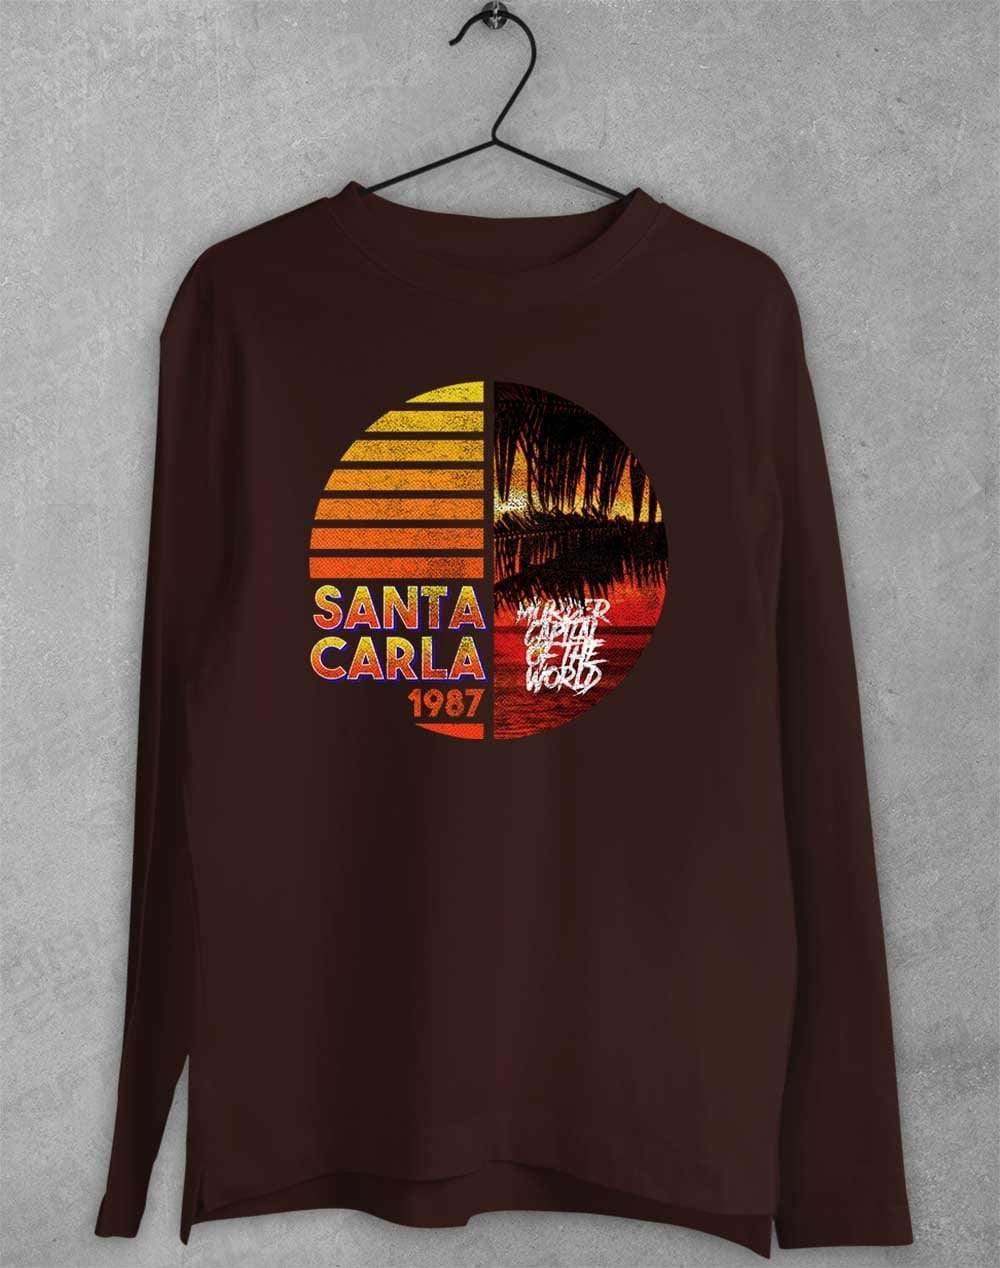 Santa Carla 1987 - Long Sleeve T-Shirt S / Dark Chocolate  - Off World Tees